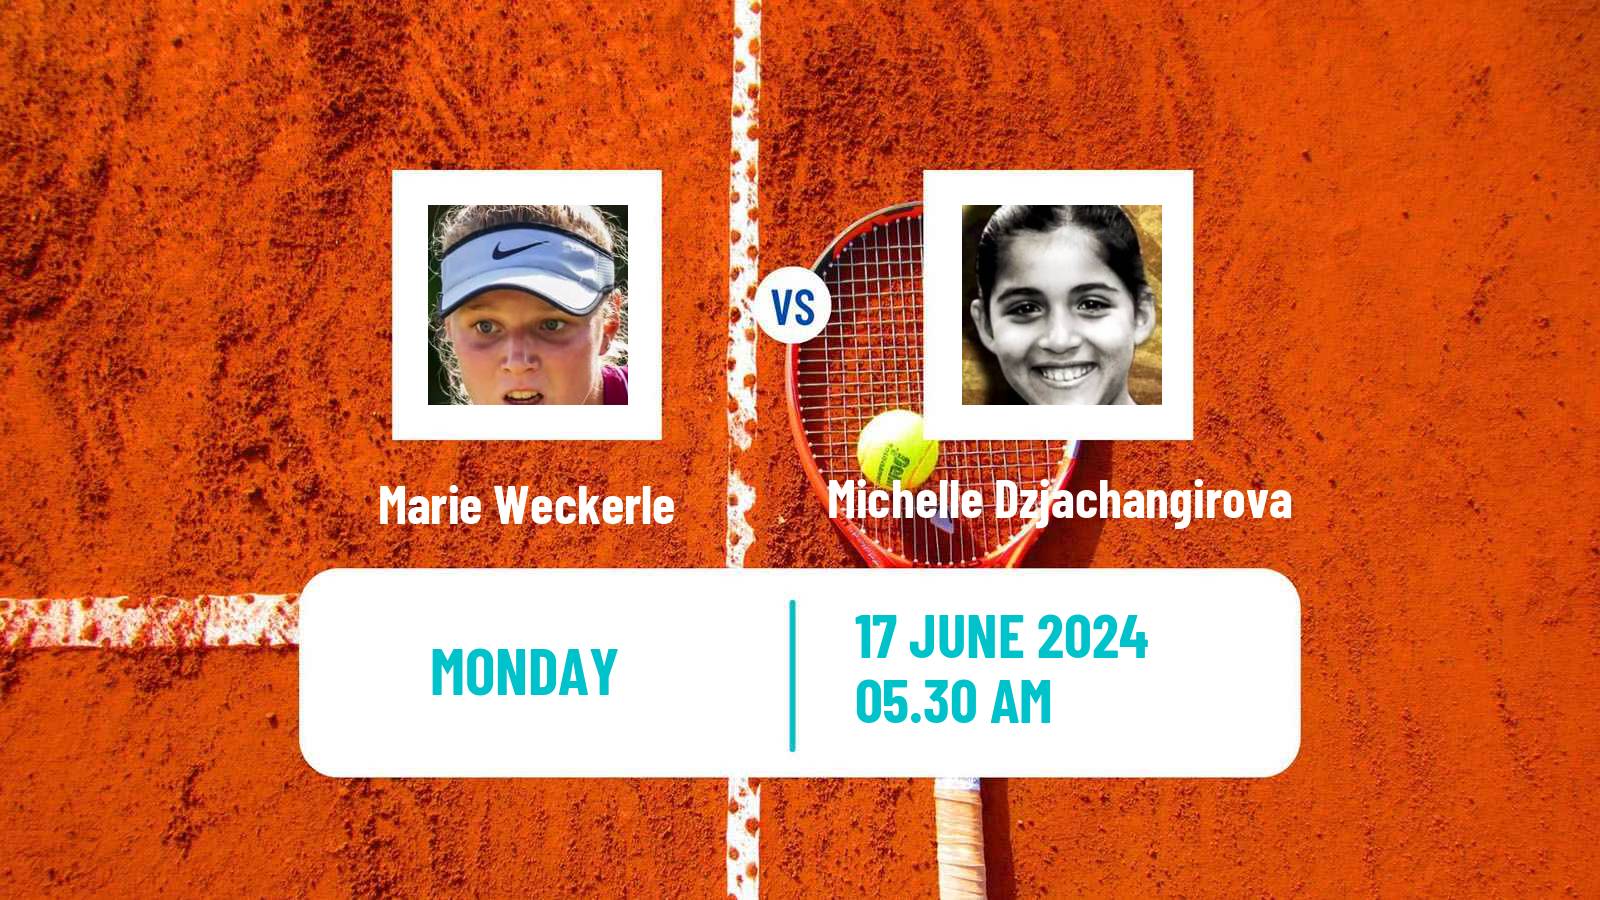 Tennis WTA Billie Jean King Cup Group III Marie Weckerle - Michelle Dzjachangirova